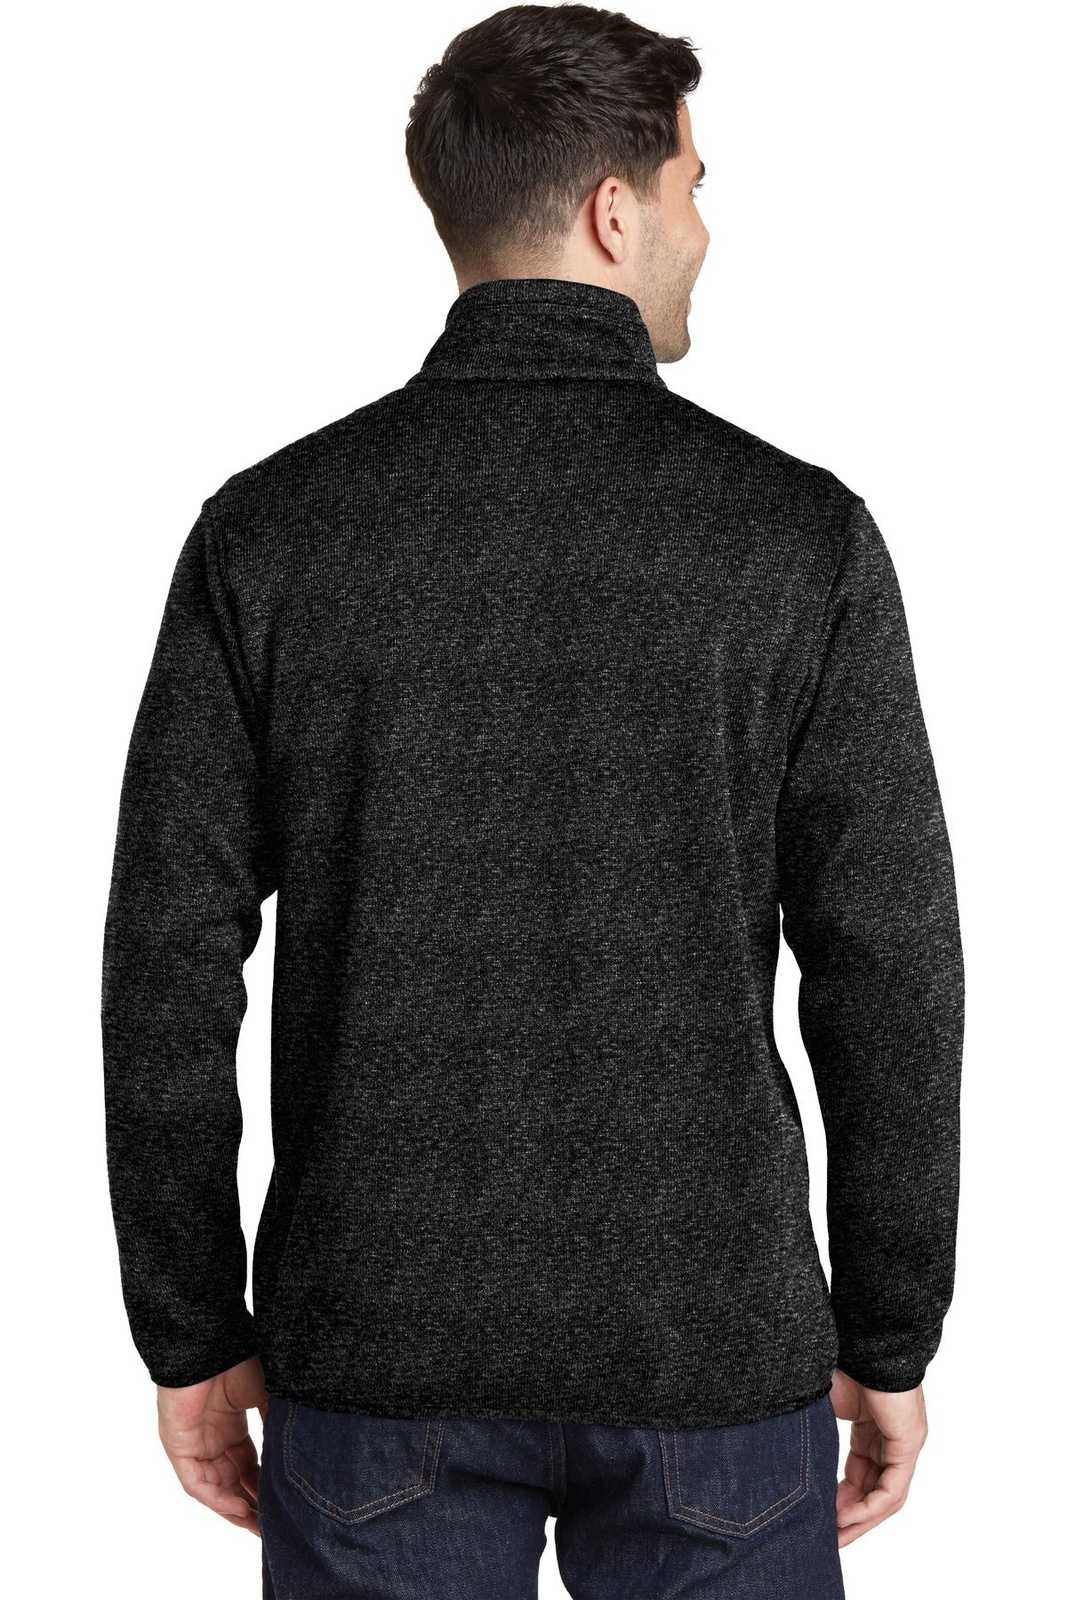 Port Authority F232 Sweater Fleece Jacket - Black Heather - HIT a Double - 1